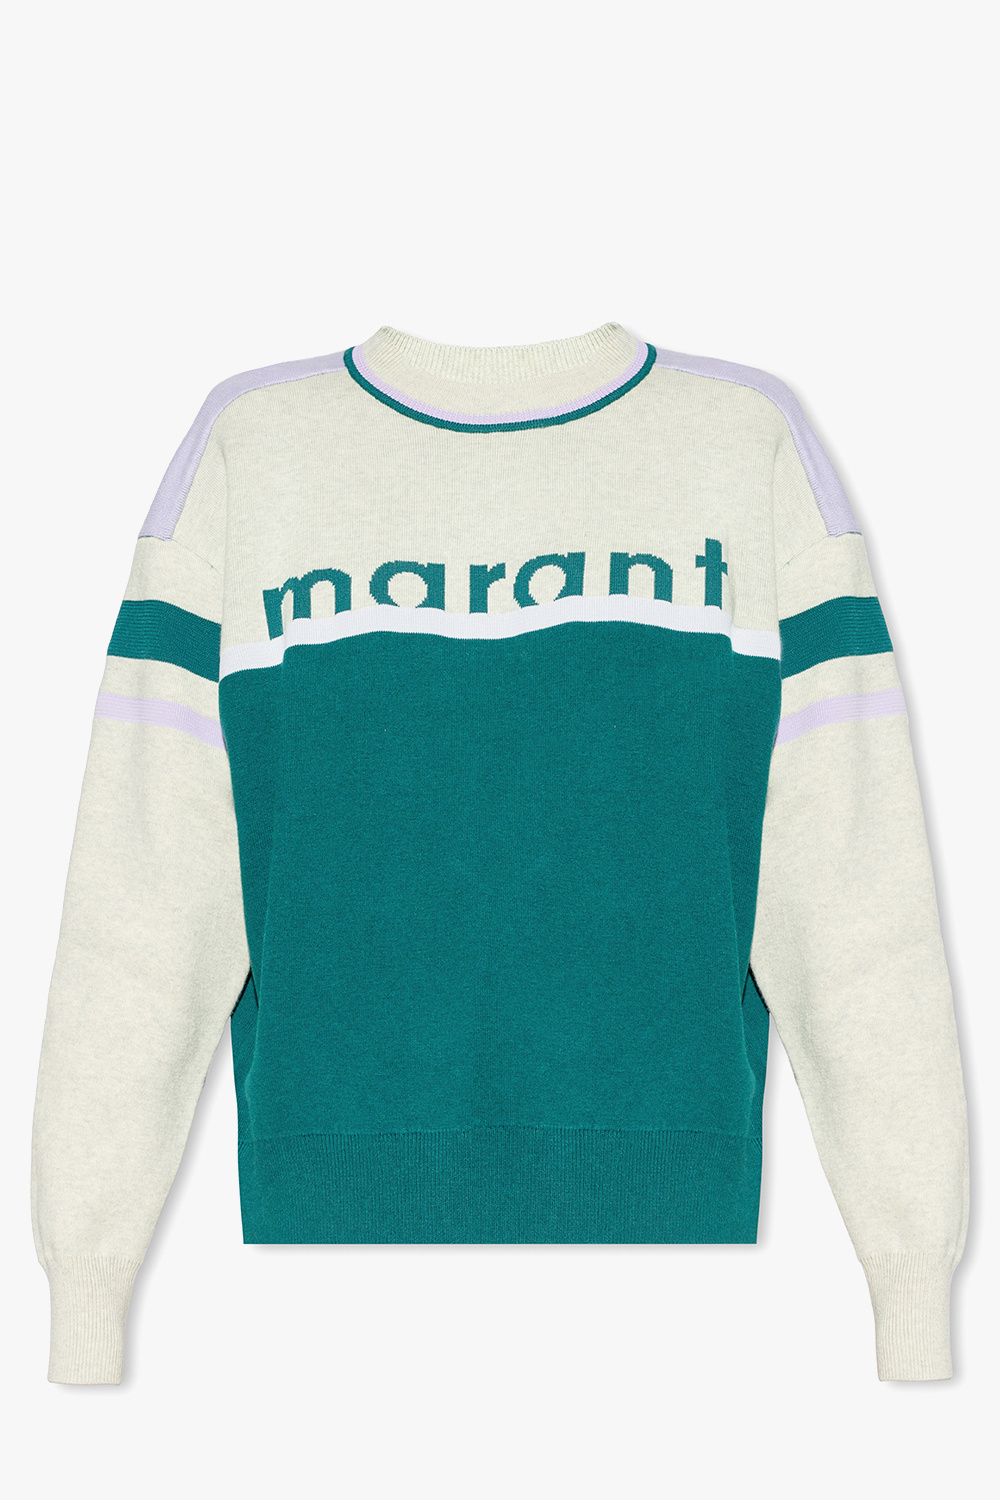 Marant Étoile ‘Carry’ sweater